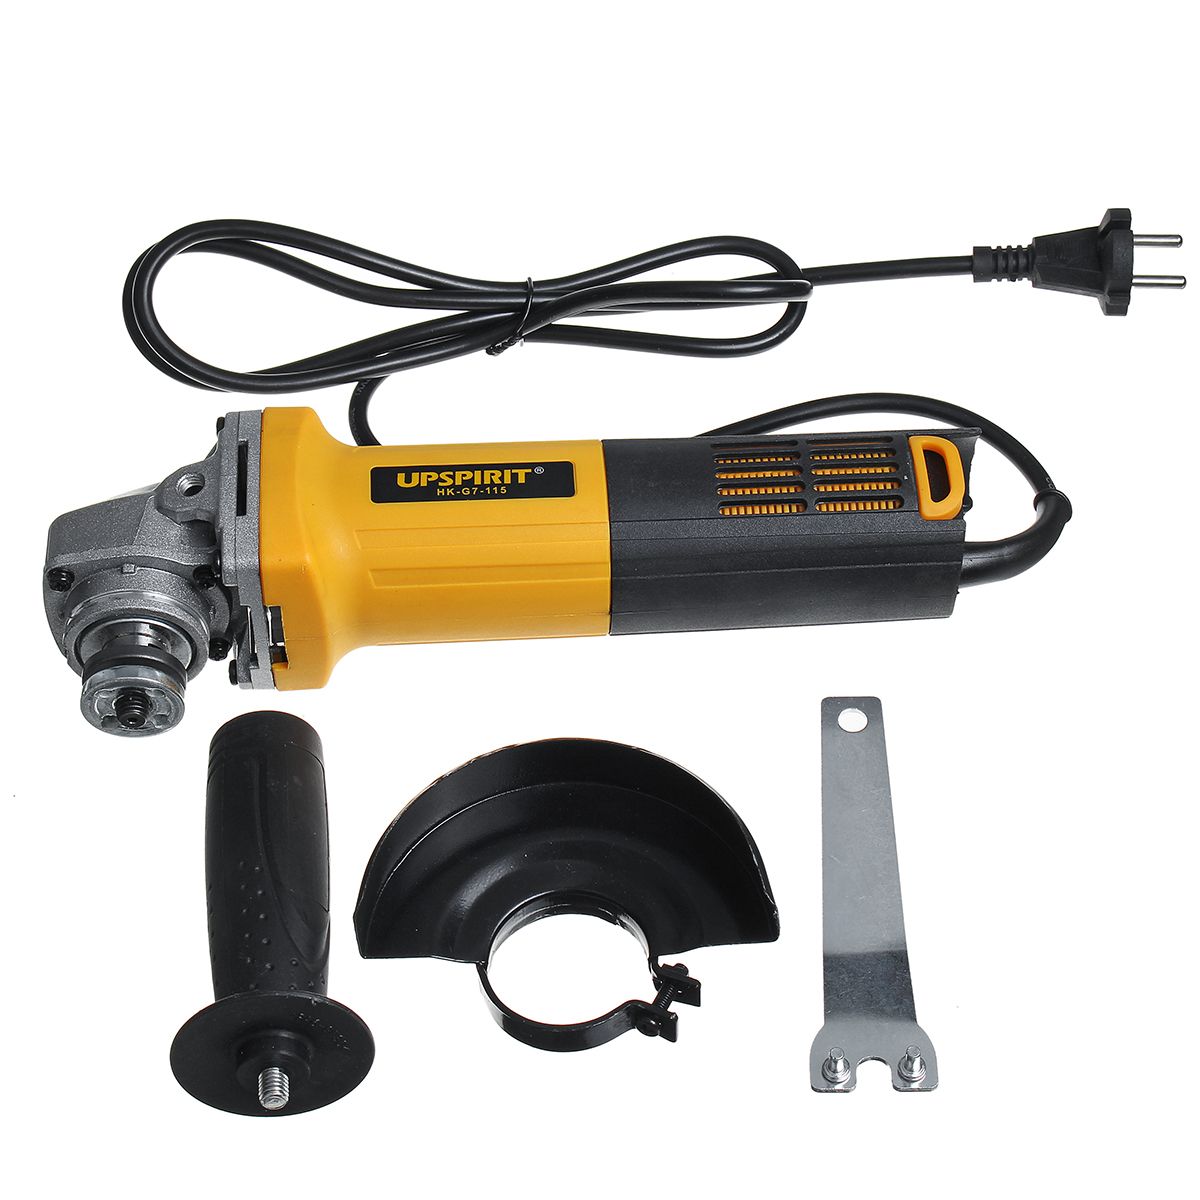 850W-10000RPM-Electric-Angle-Grinder-115mm-Grinding-Polishing-Machine-Polisher-Cutting-Tool-1560866